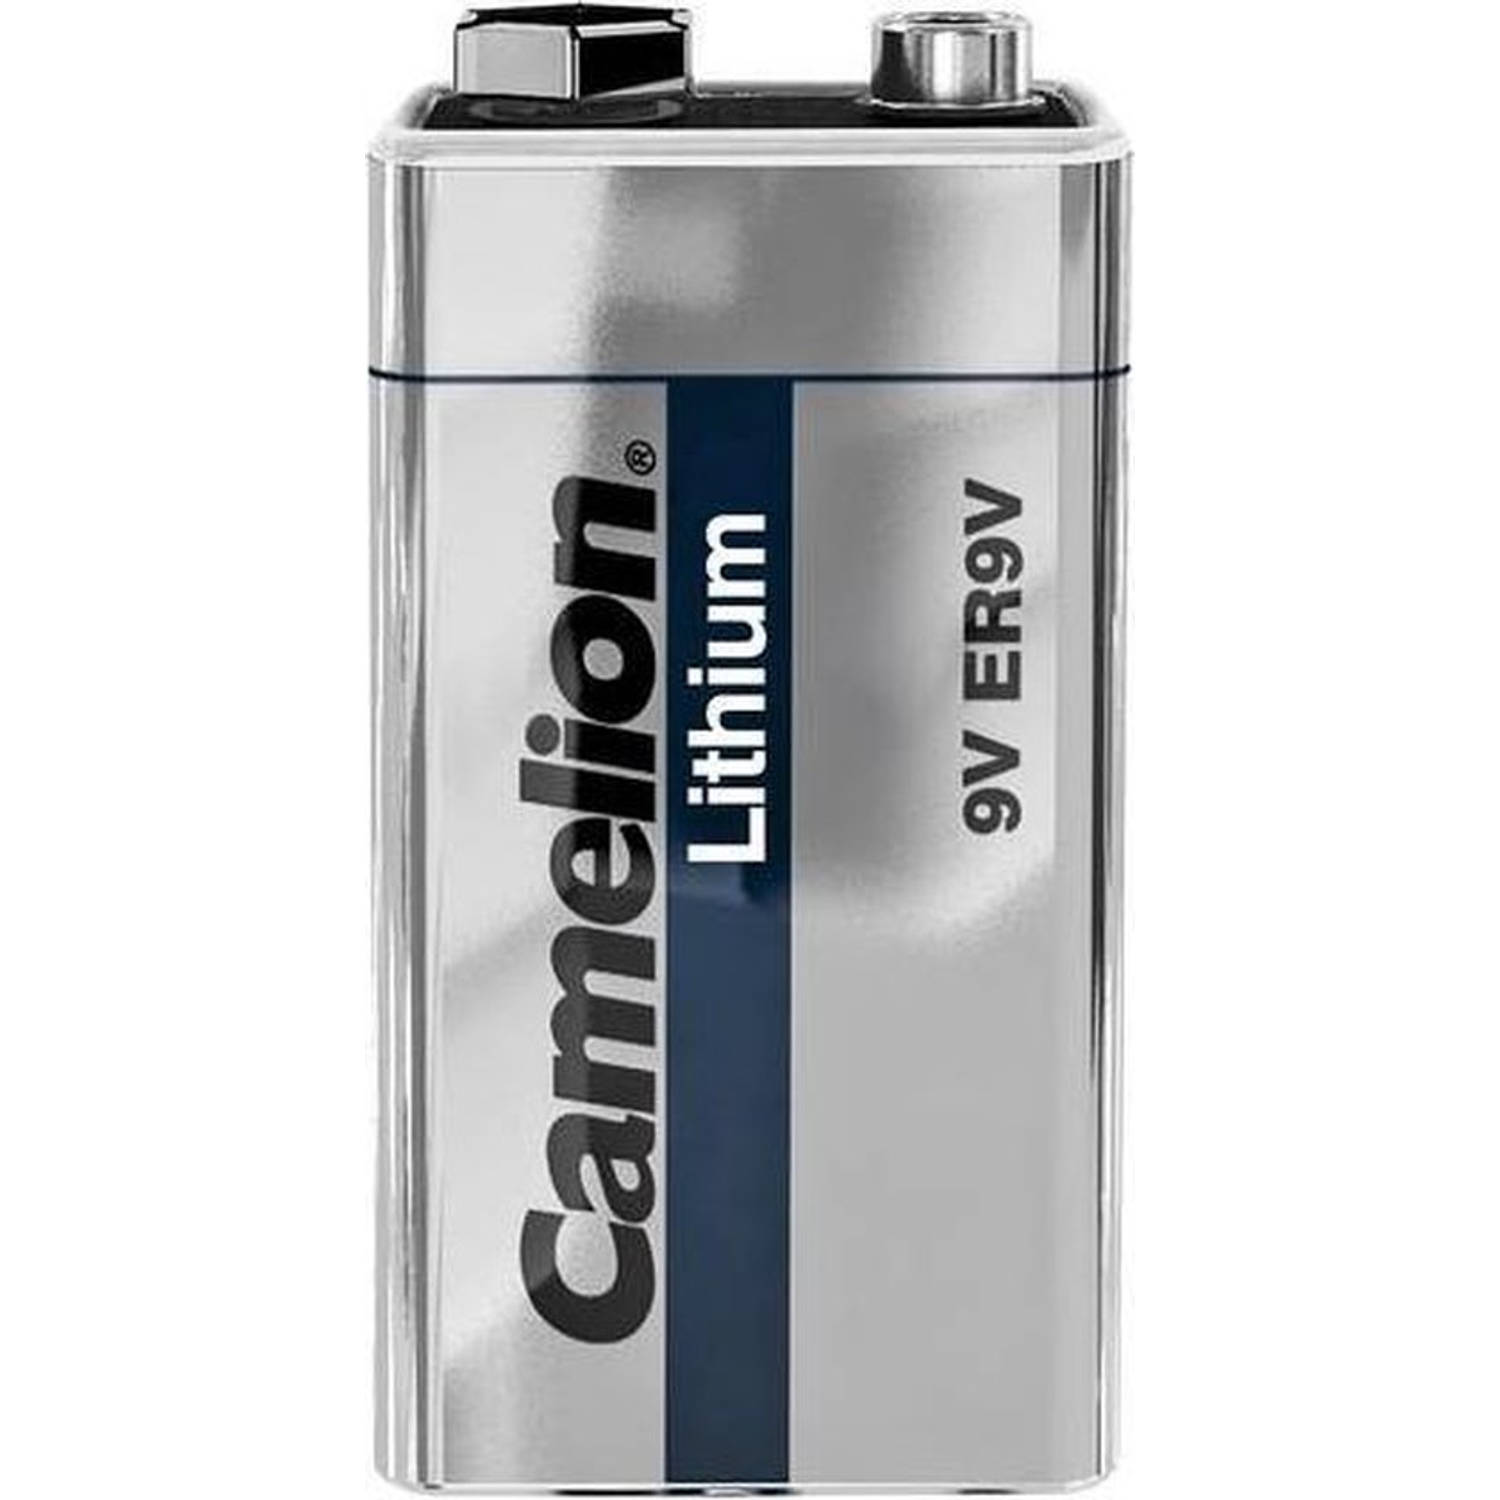 Battery for Smoke Detectors Camelion Lithium 9V (1 Pcs Retail) Cam